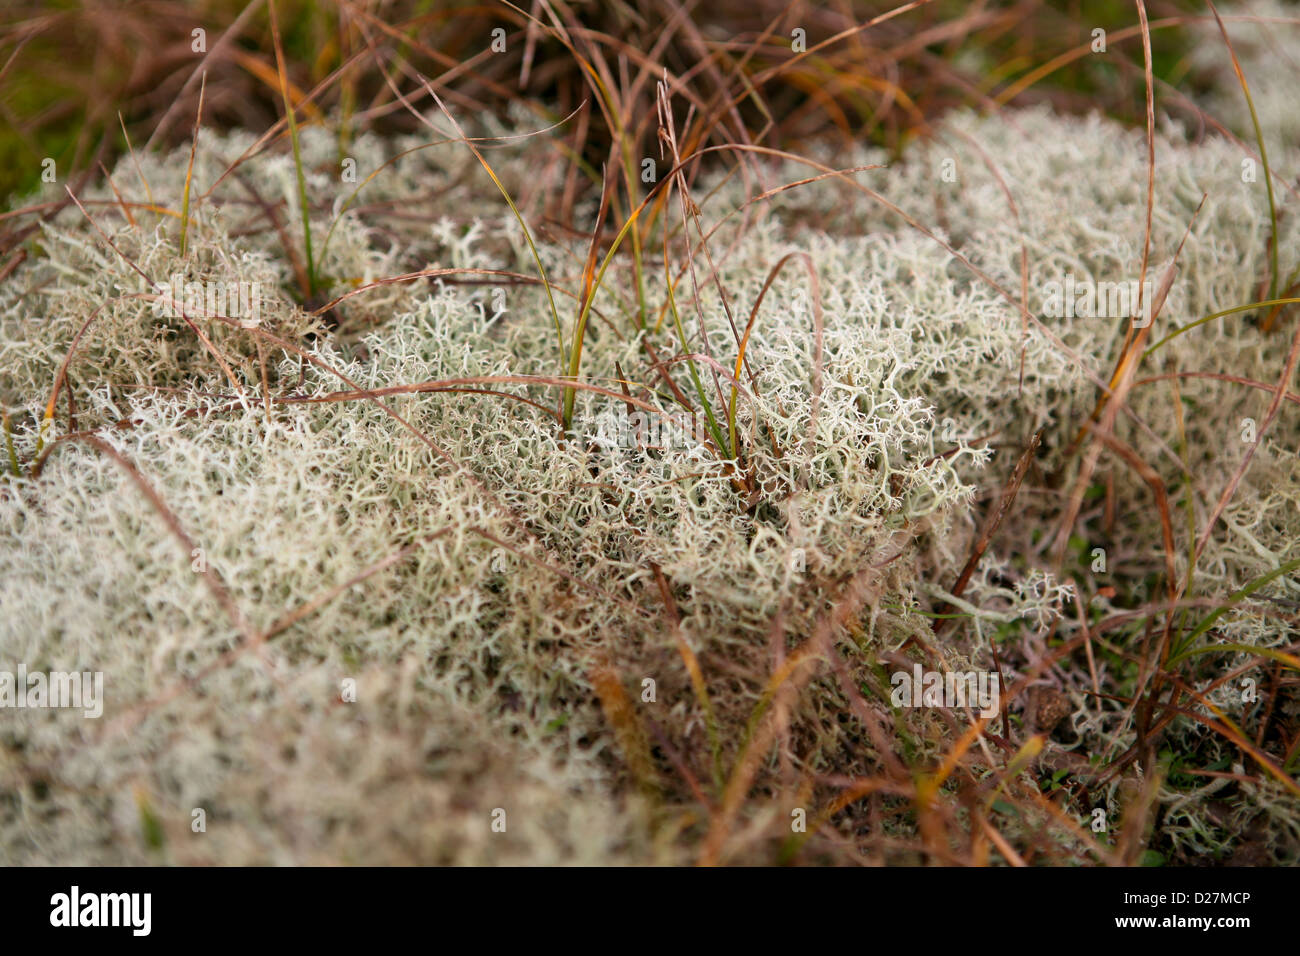 Reindeer lichen (Cladonia portentosa) with sedges / grasses Stock Photo